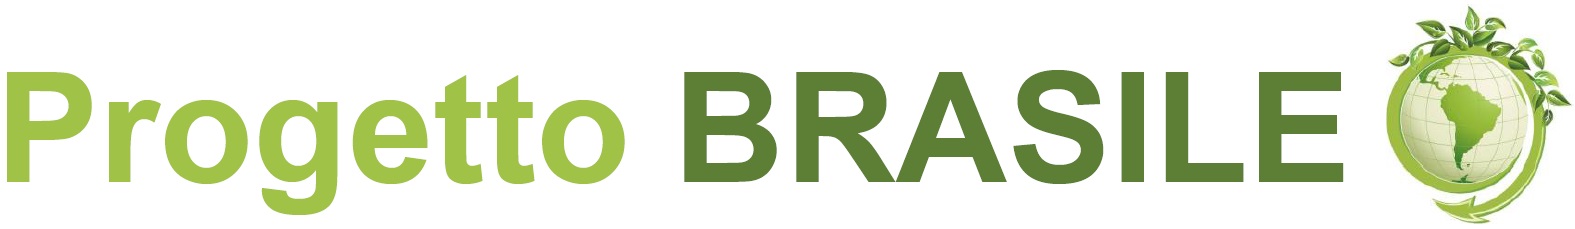 banner lungo progetto brasile